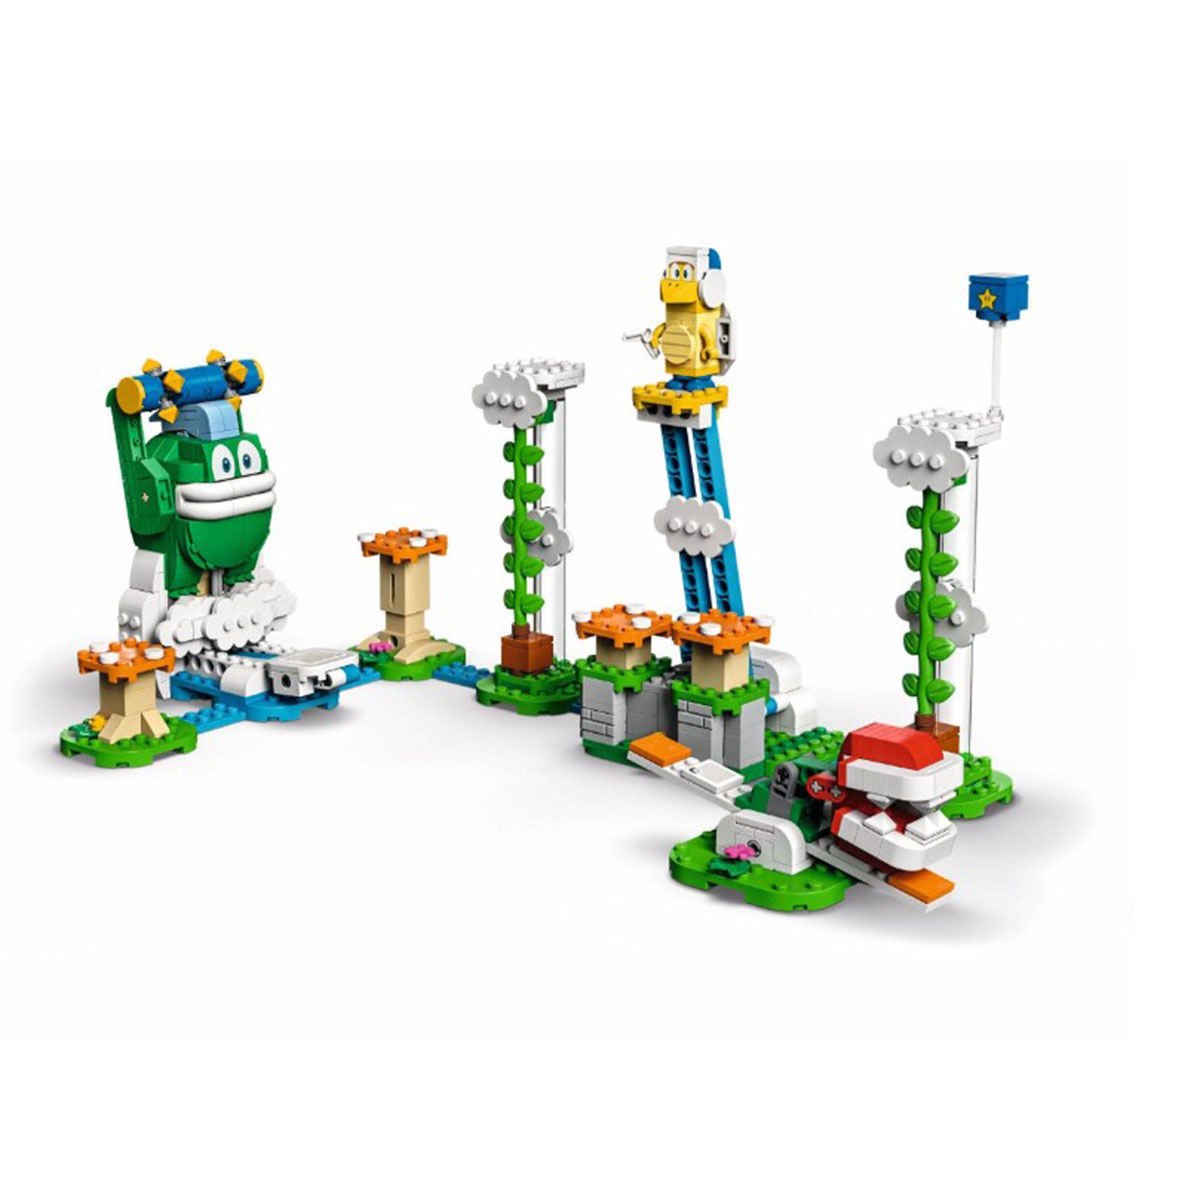 71409 Lego Super Mario Big Spikeın Bulut Engeli Ek Macera Seti 540 parça +7 yaş